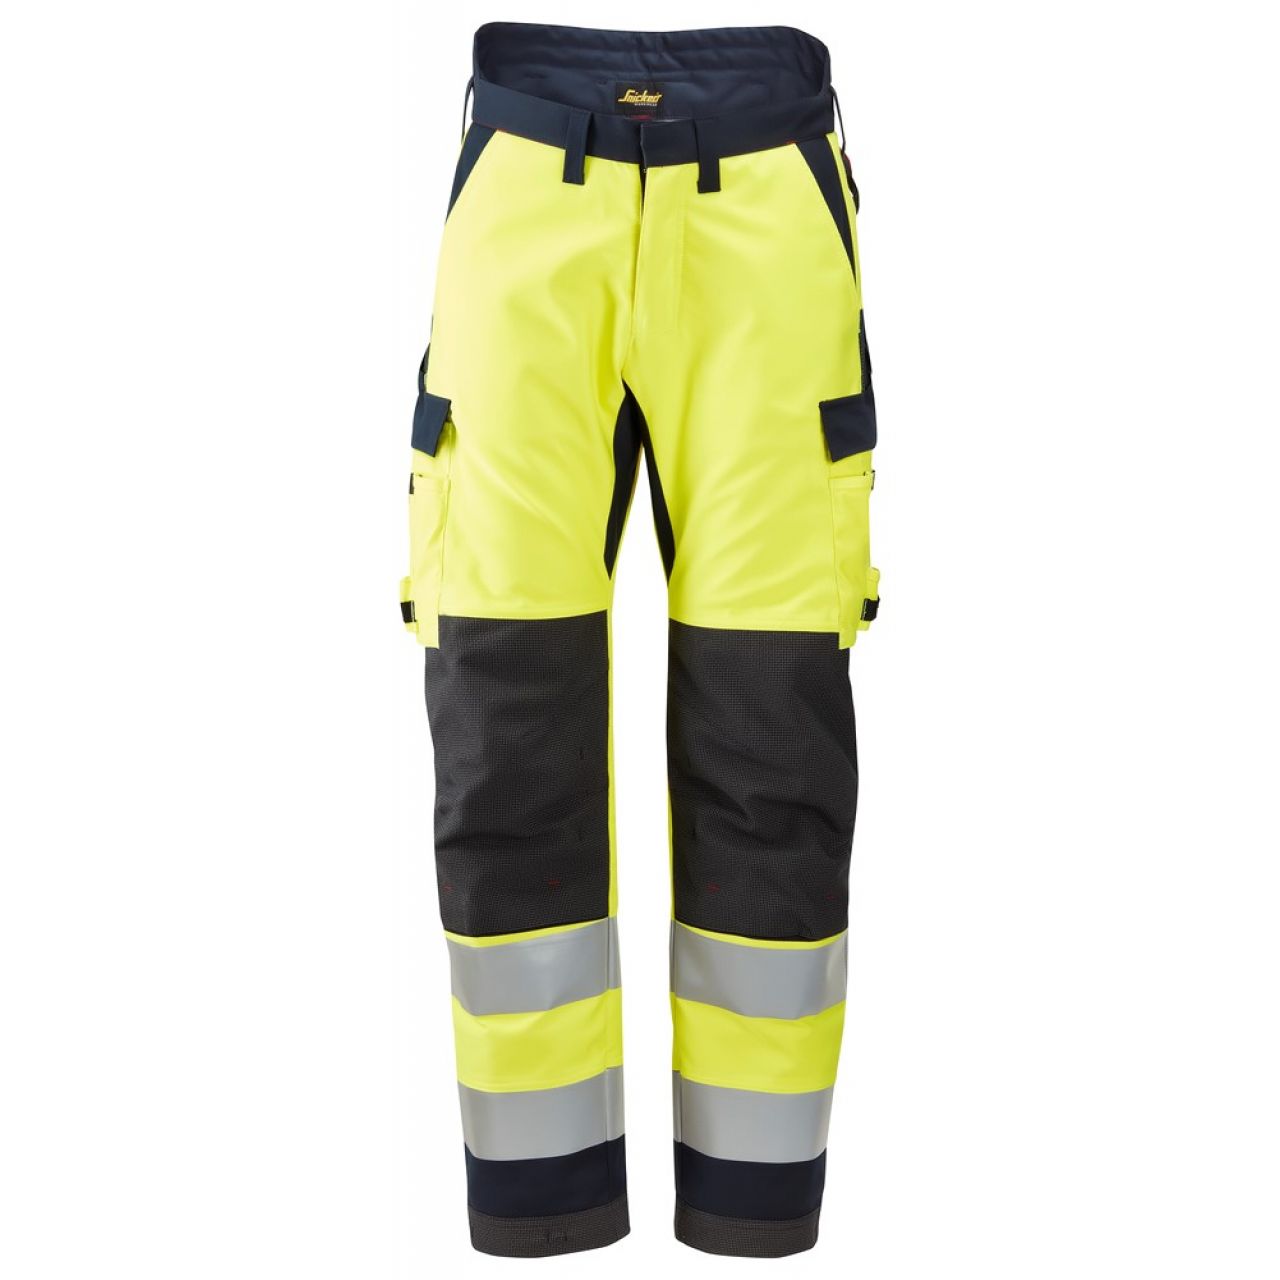 6663 Pantalones largos de trabajo aislantes 37.5® de alta visibiidad clase 2 ProtecWork amarillo-azul marino talla 54